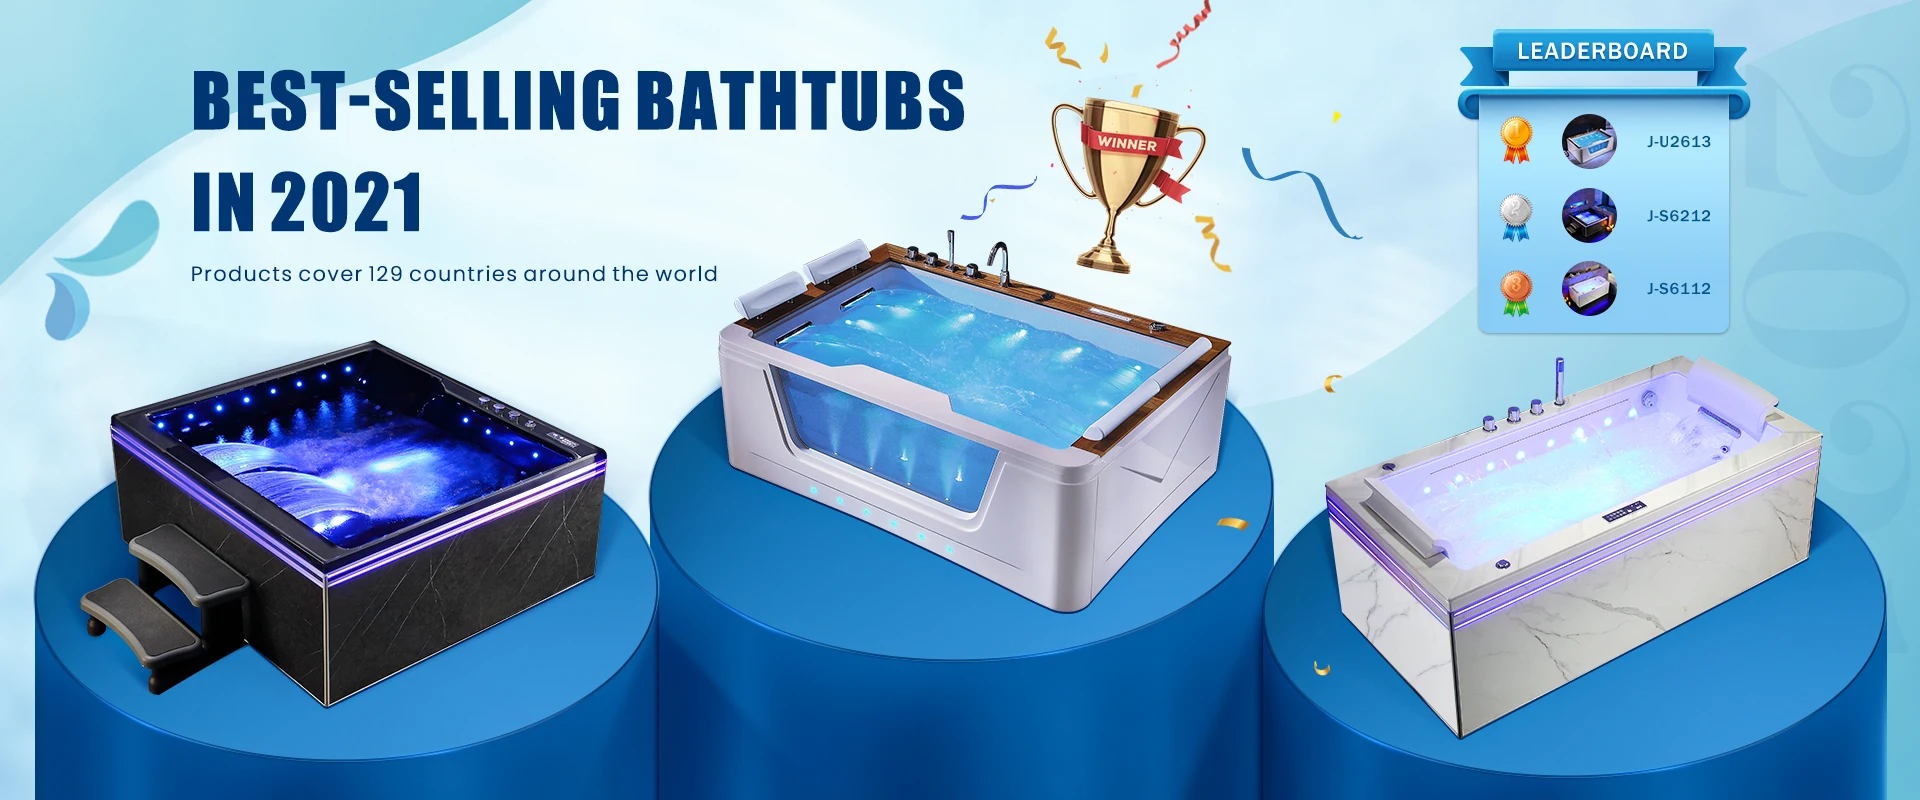 whirlpool bathtub massage spa tub